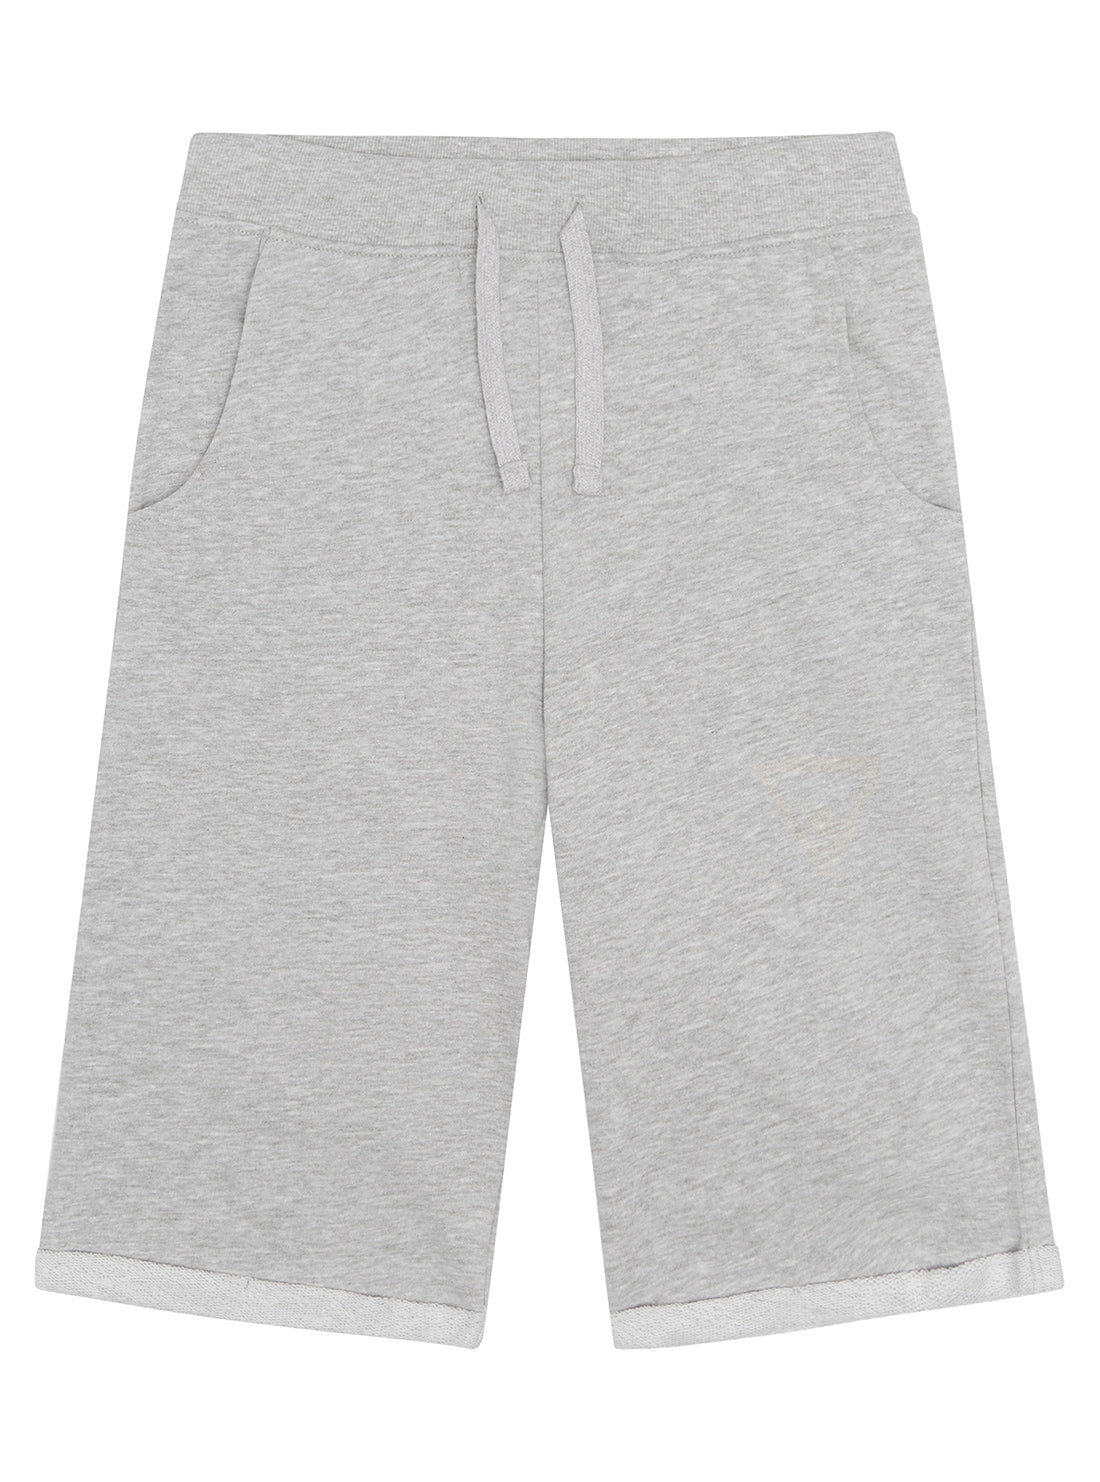 GUESS Big Boy Grey Active Shorts (7-16) L93Q25KAUG0 Front View